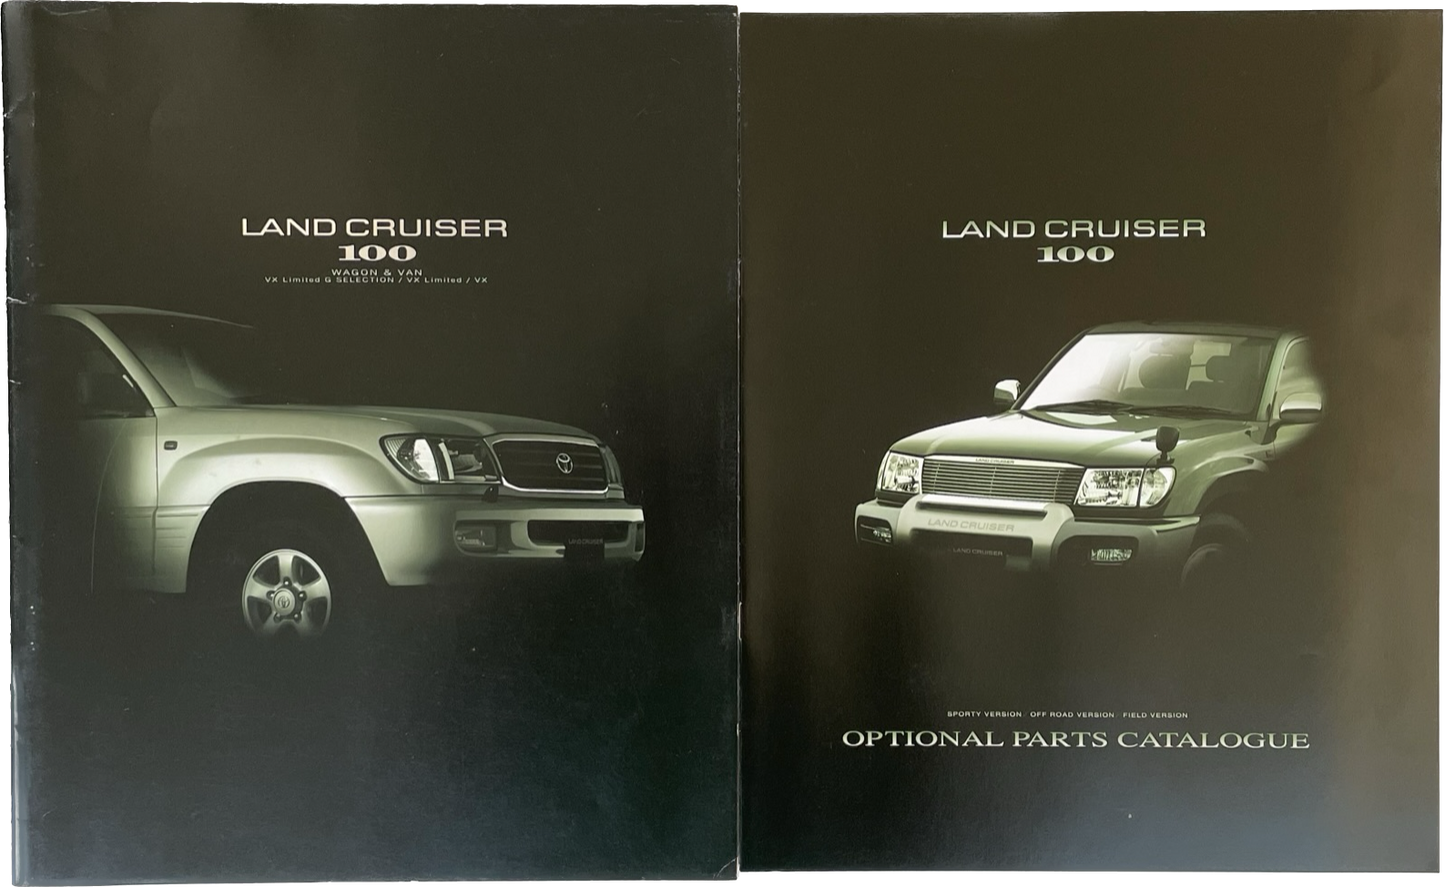 100 Series JDM Brochure w/ Optional Parts Catalogue 1998